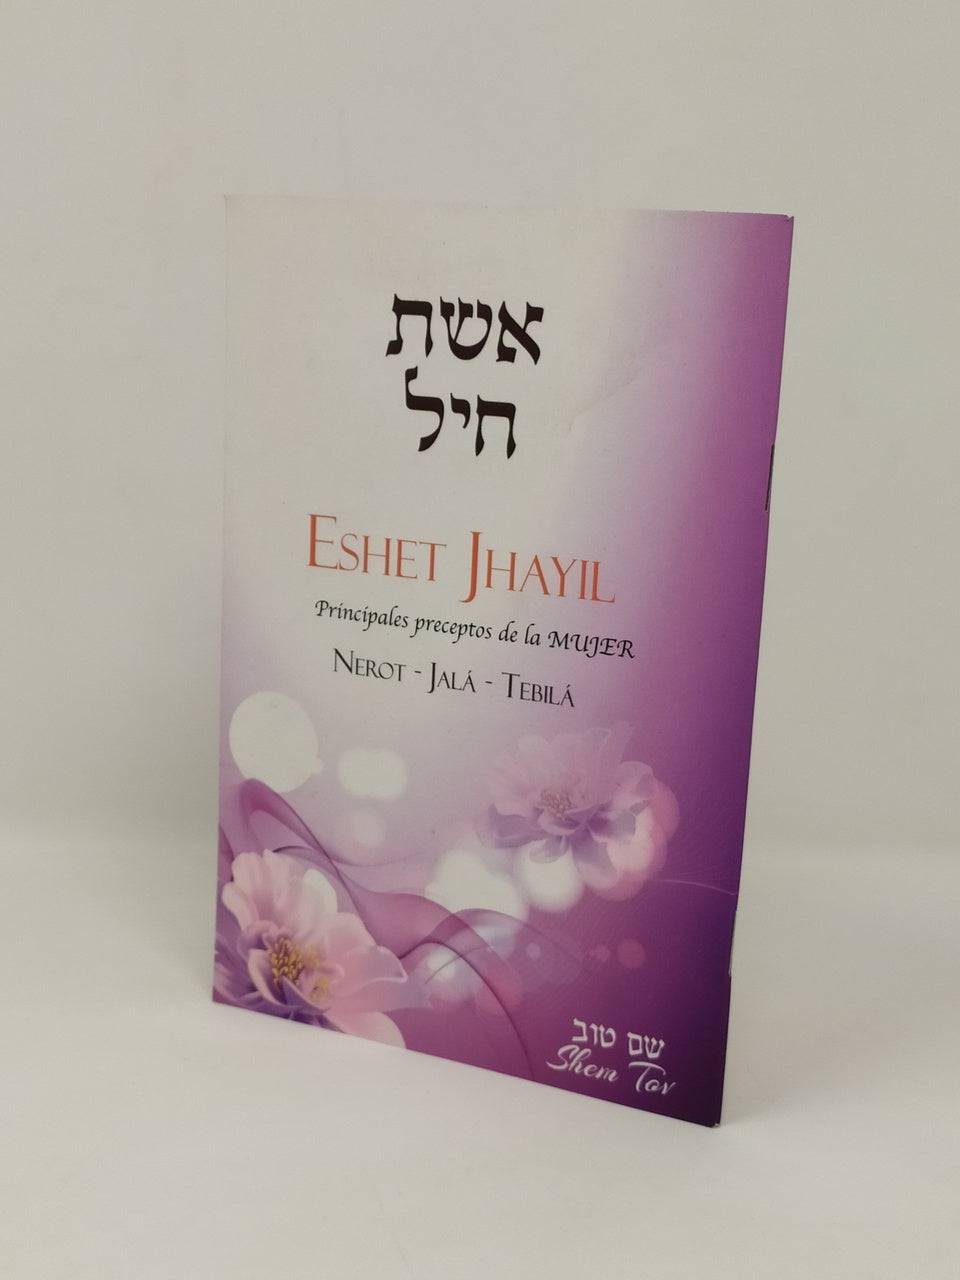 Eshet Jail Shem Tob Pasta Blanda - Libreria Jerusalem Centro